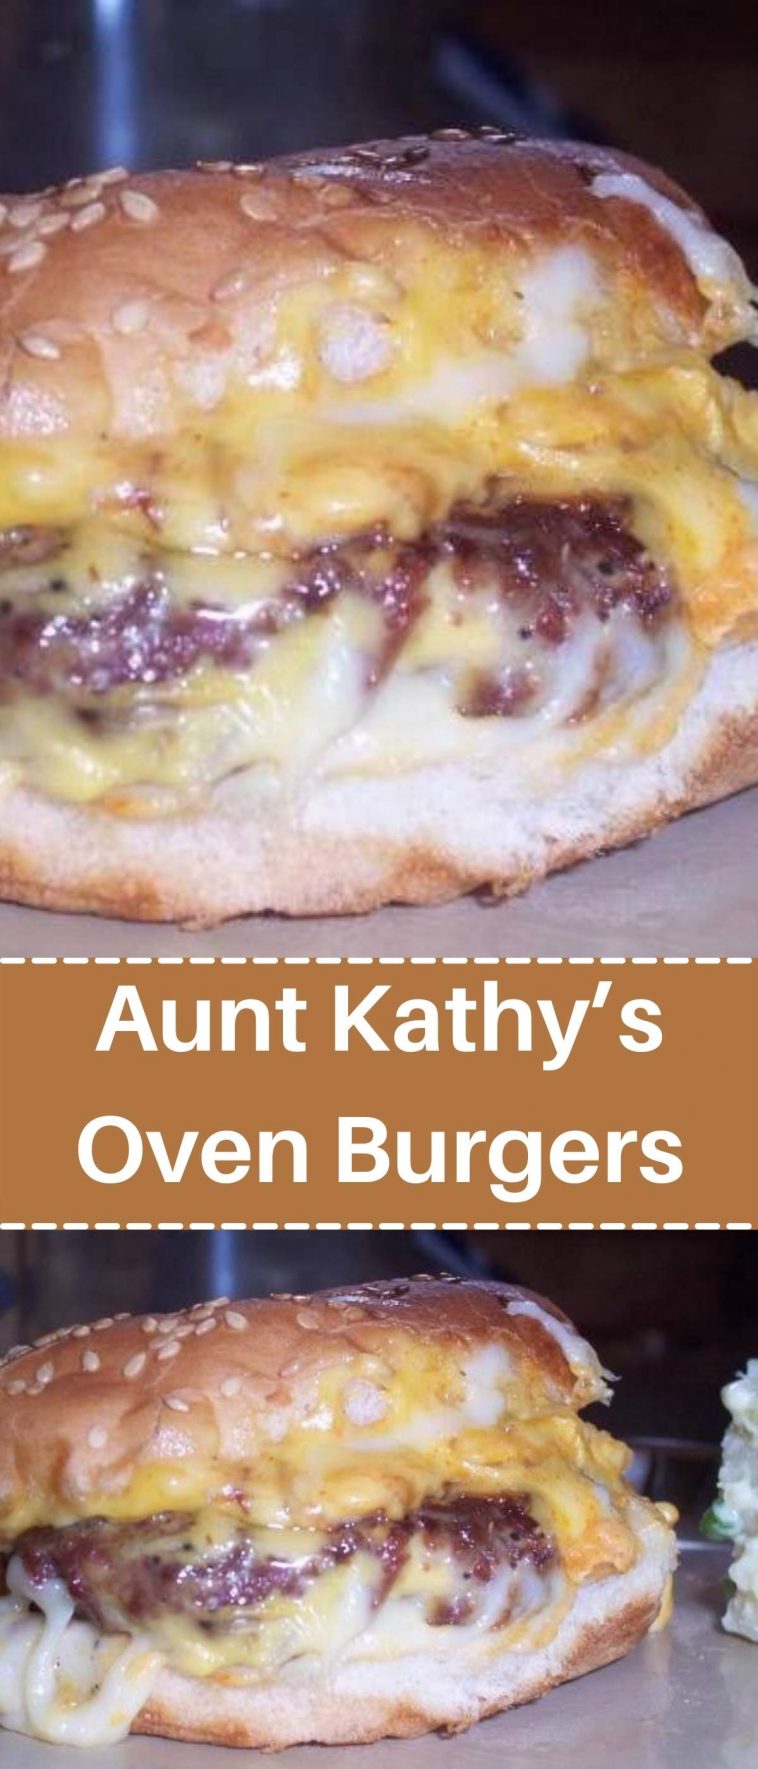 Aunt Kathy’s Oven Burgers